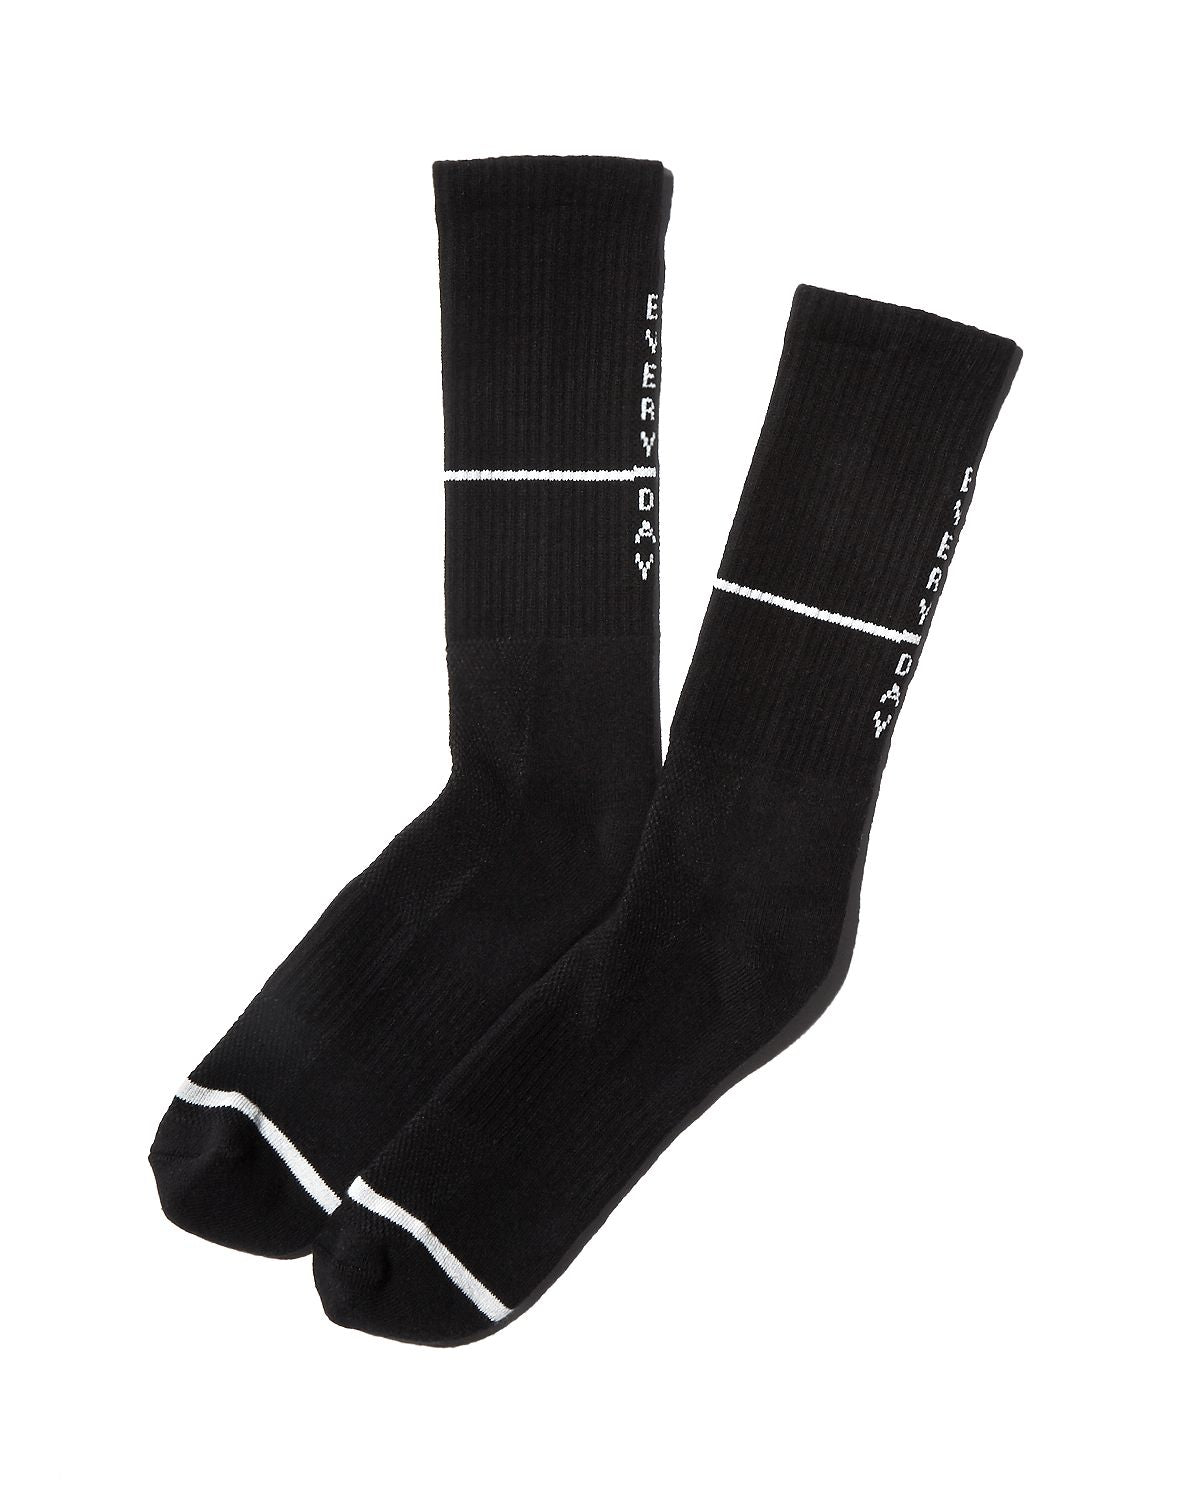 Necessary Anywhere N/a Every Day Socks Black